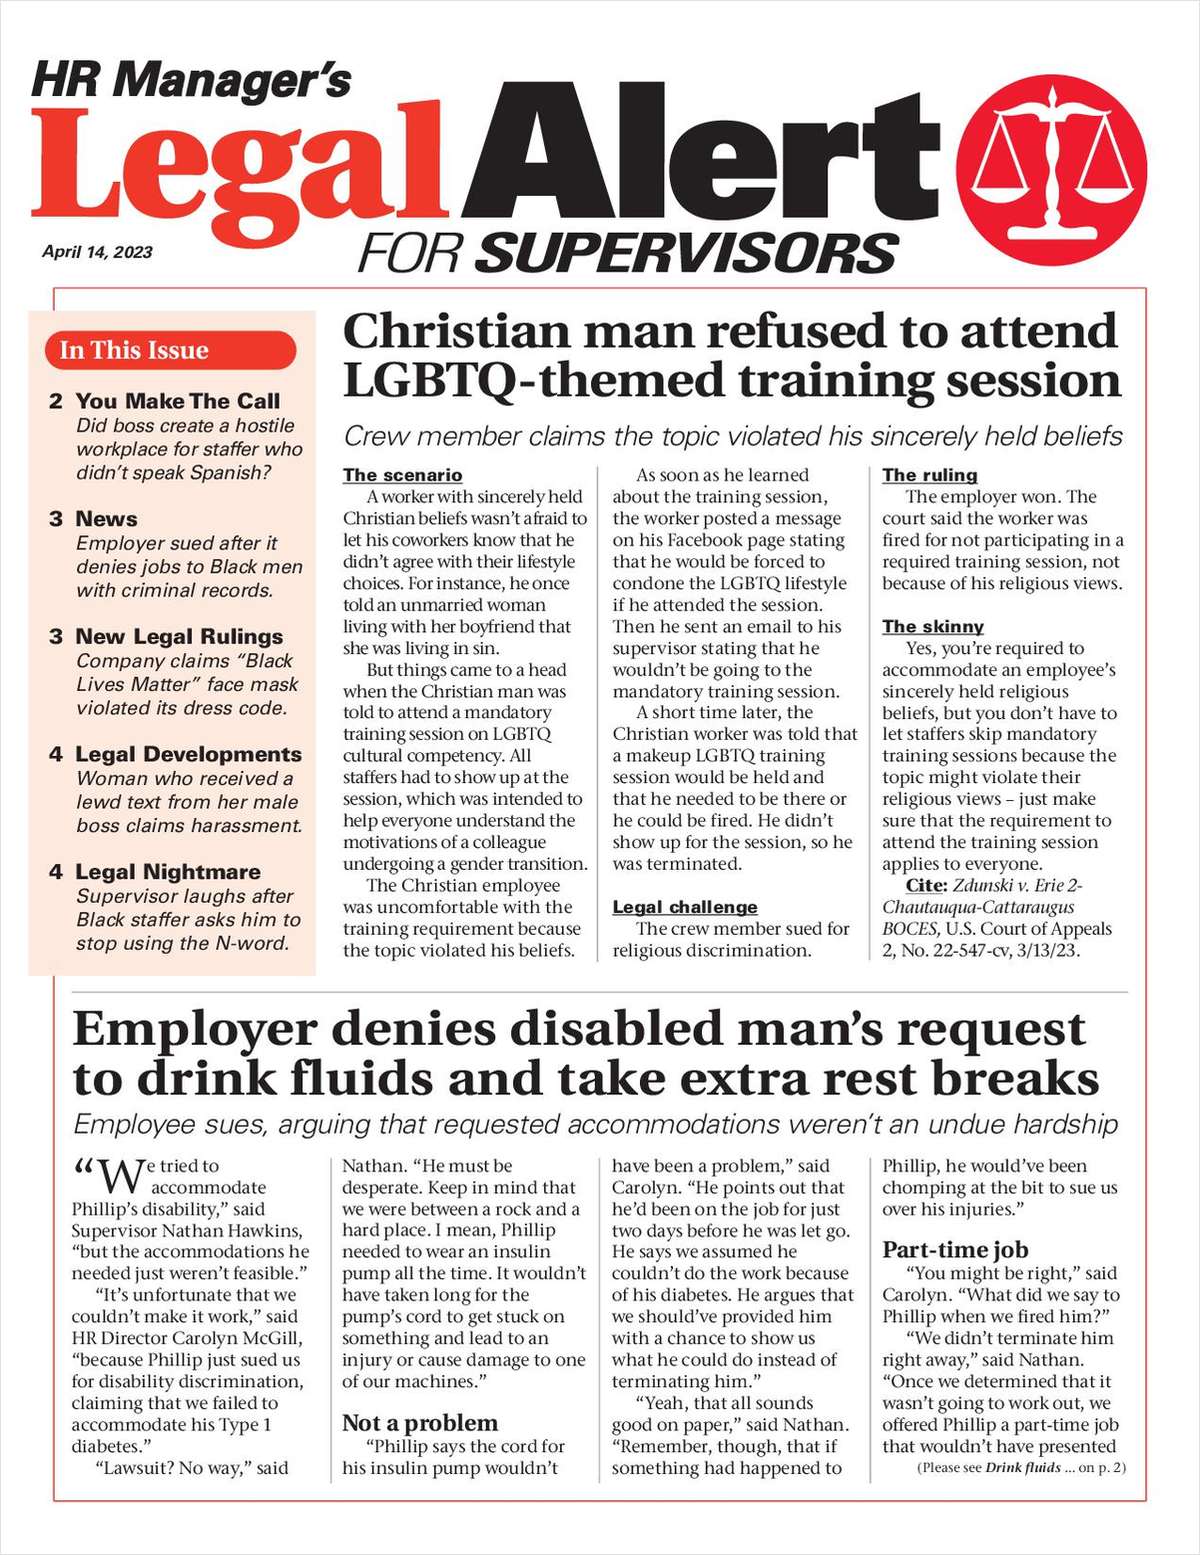 HR Manager's Legal Alert for Supervisors Newsletter: April 14 Edition